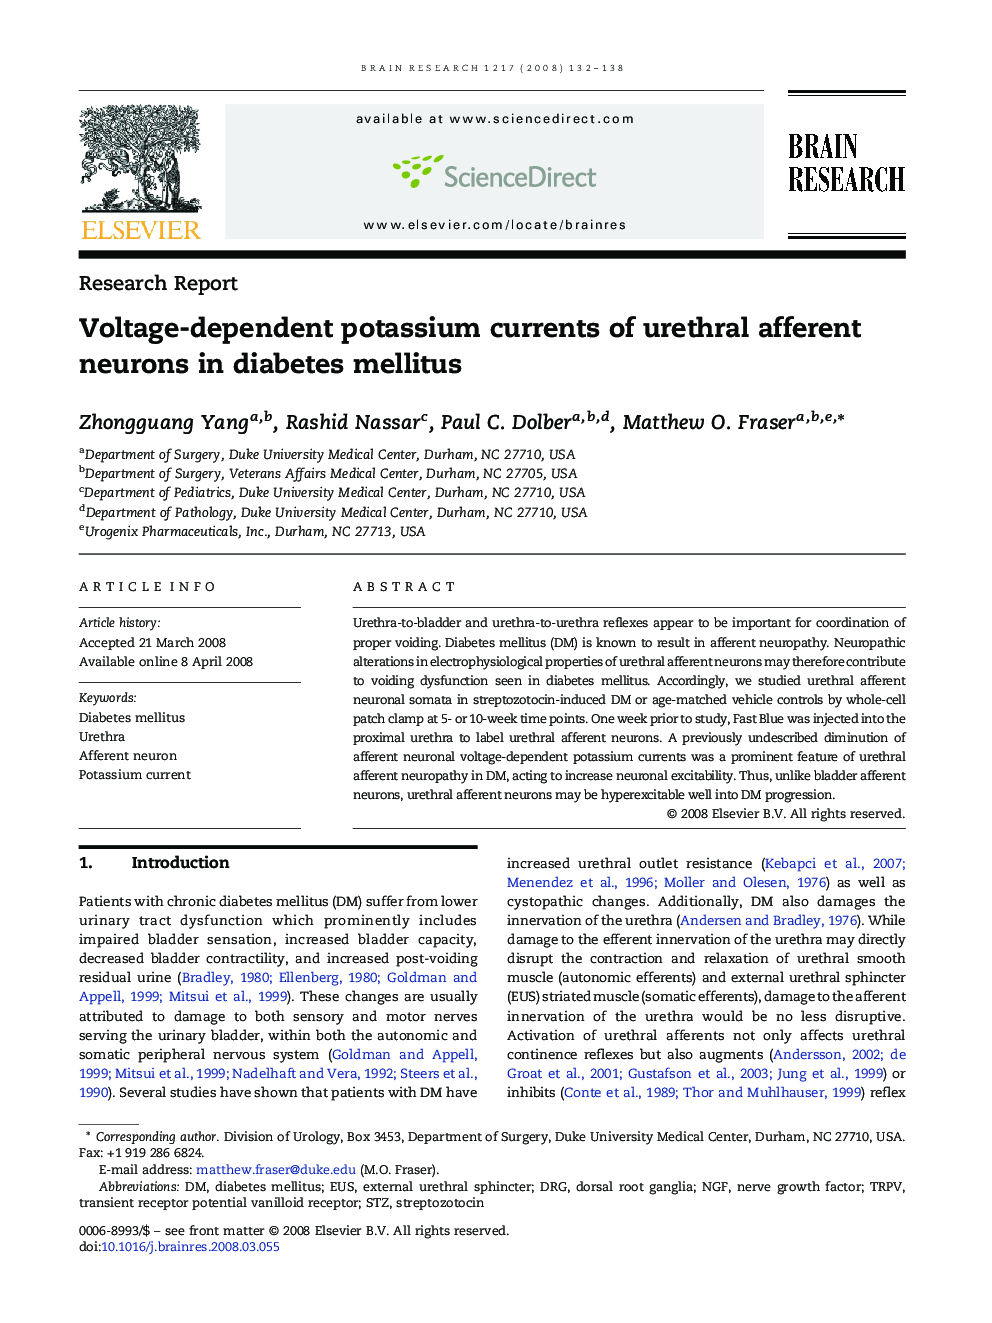 Voltage-dependent potassium currents of urethral afferent neurons in diabetes mellitus